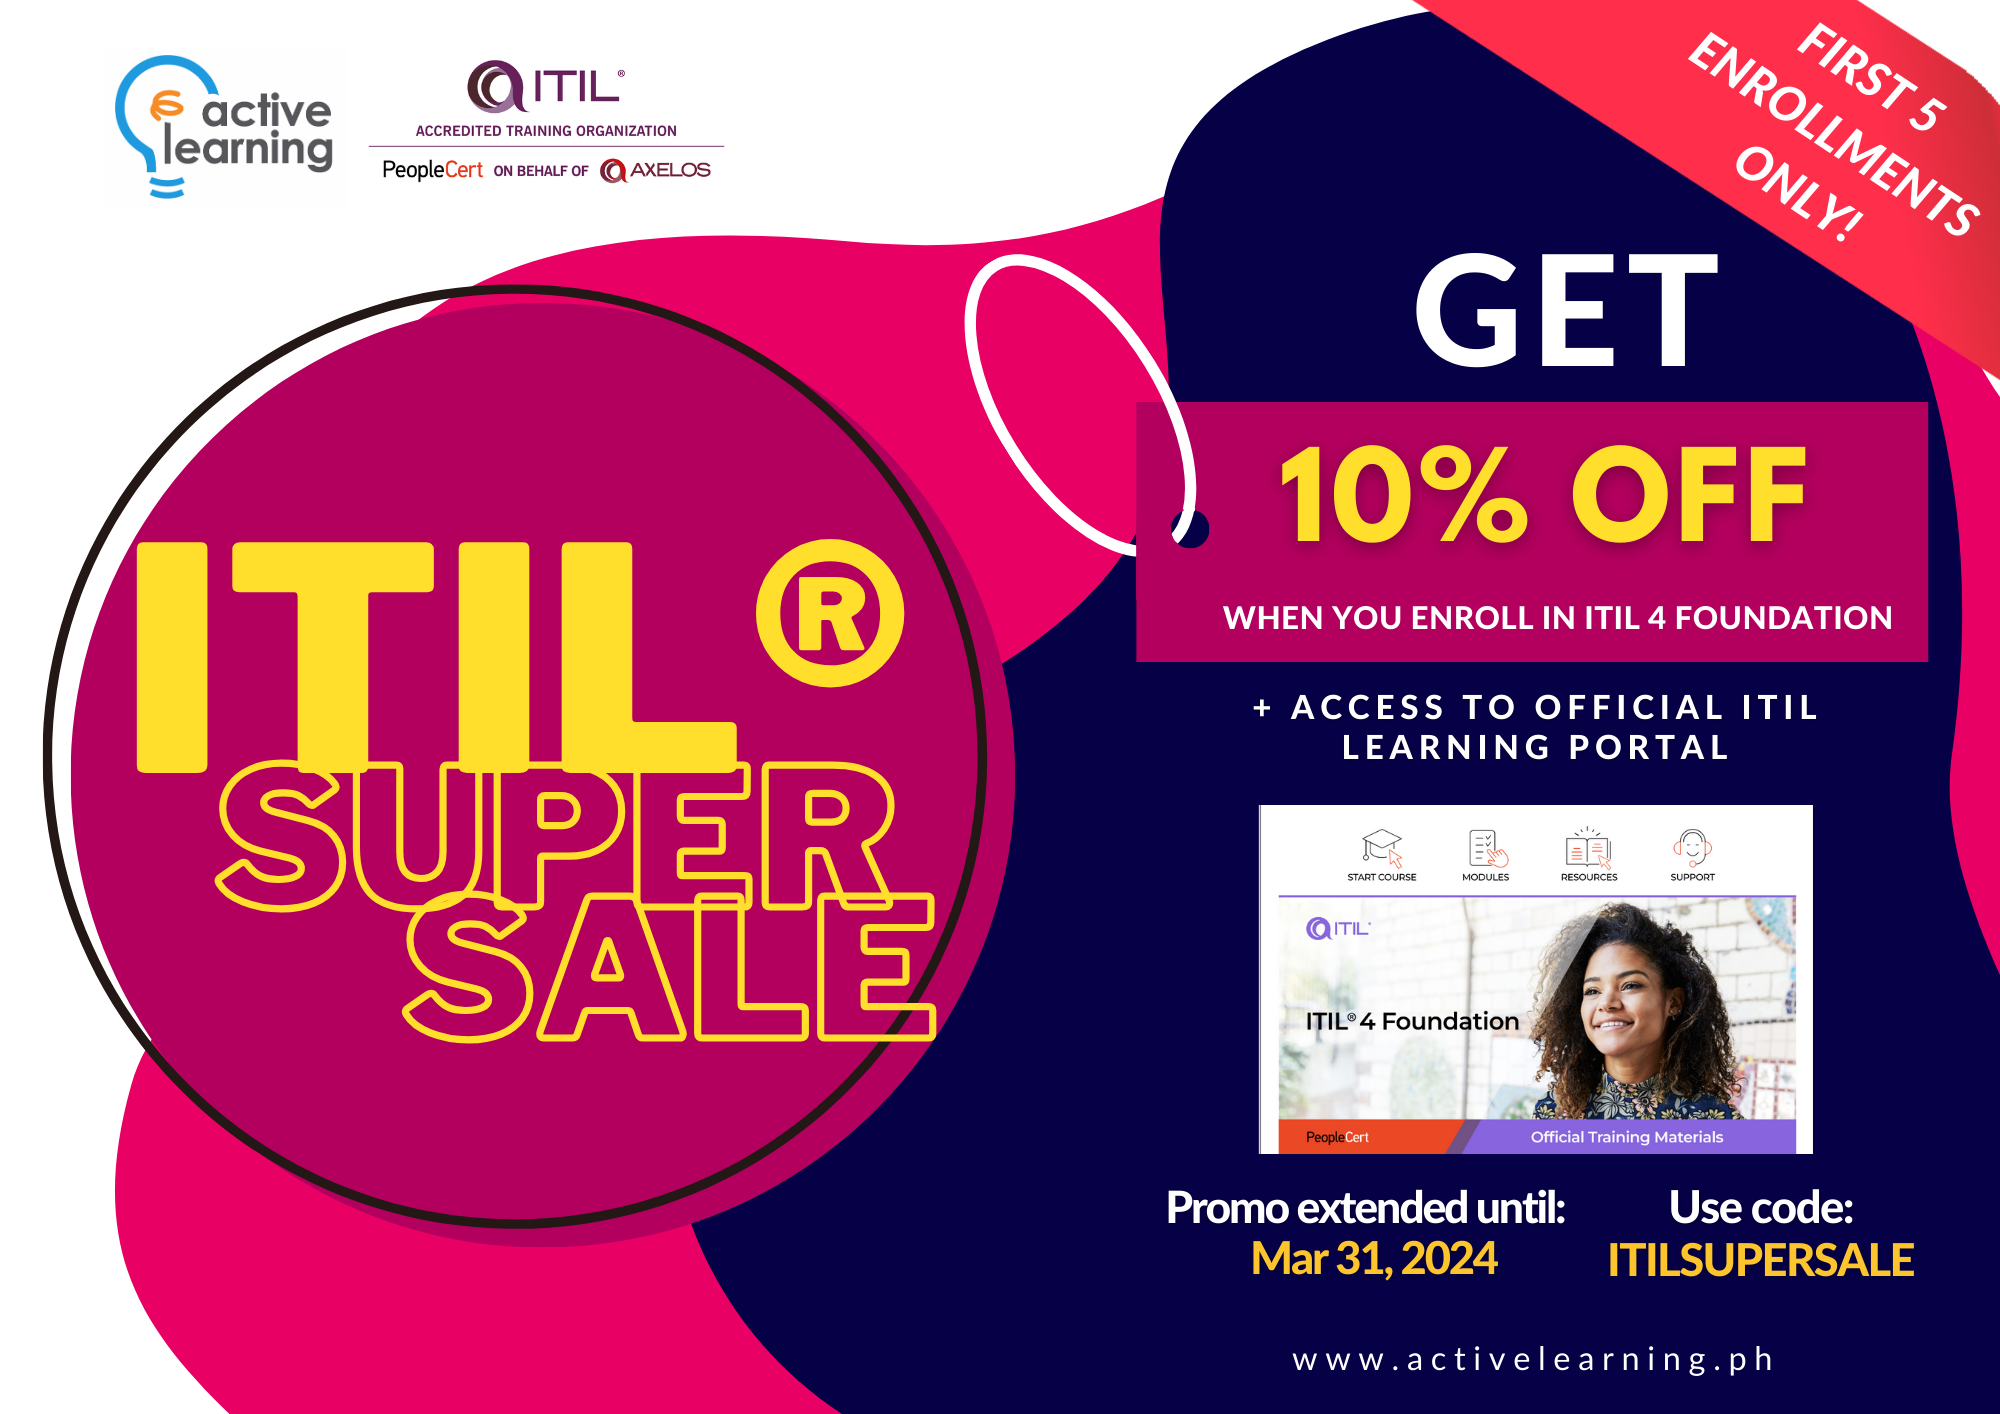 ITIL Super Sale Promo